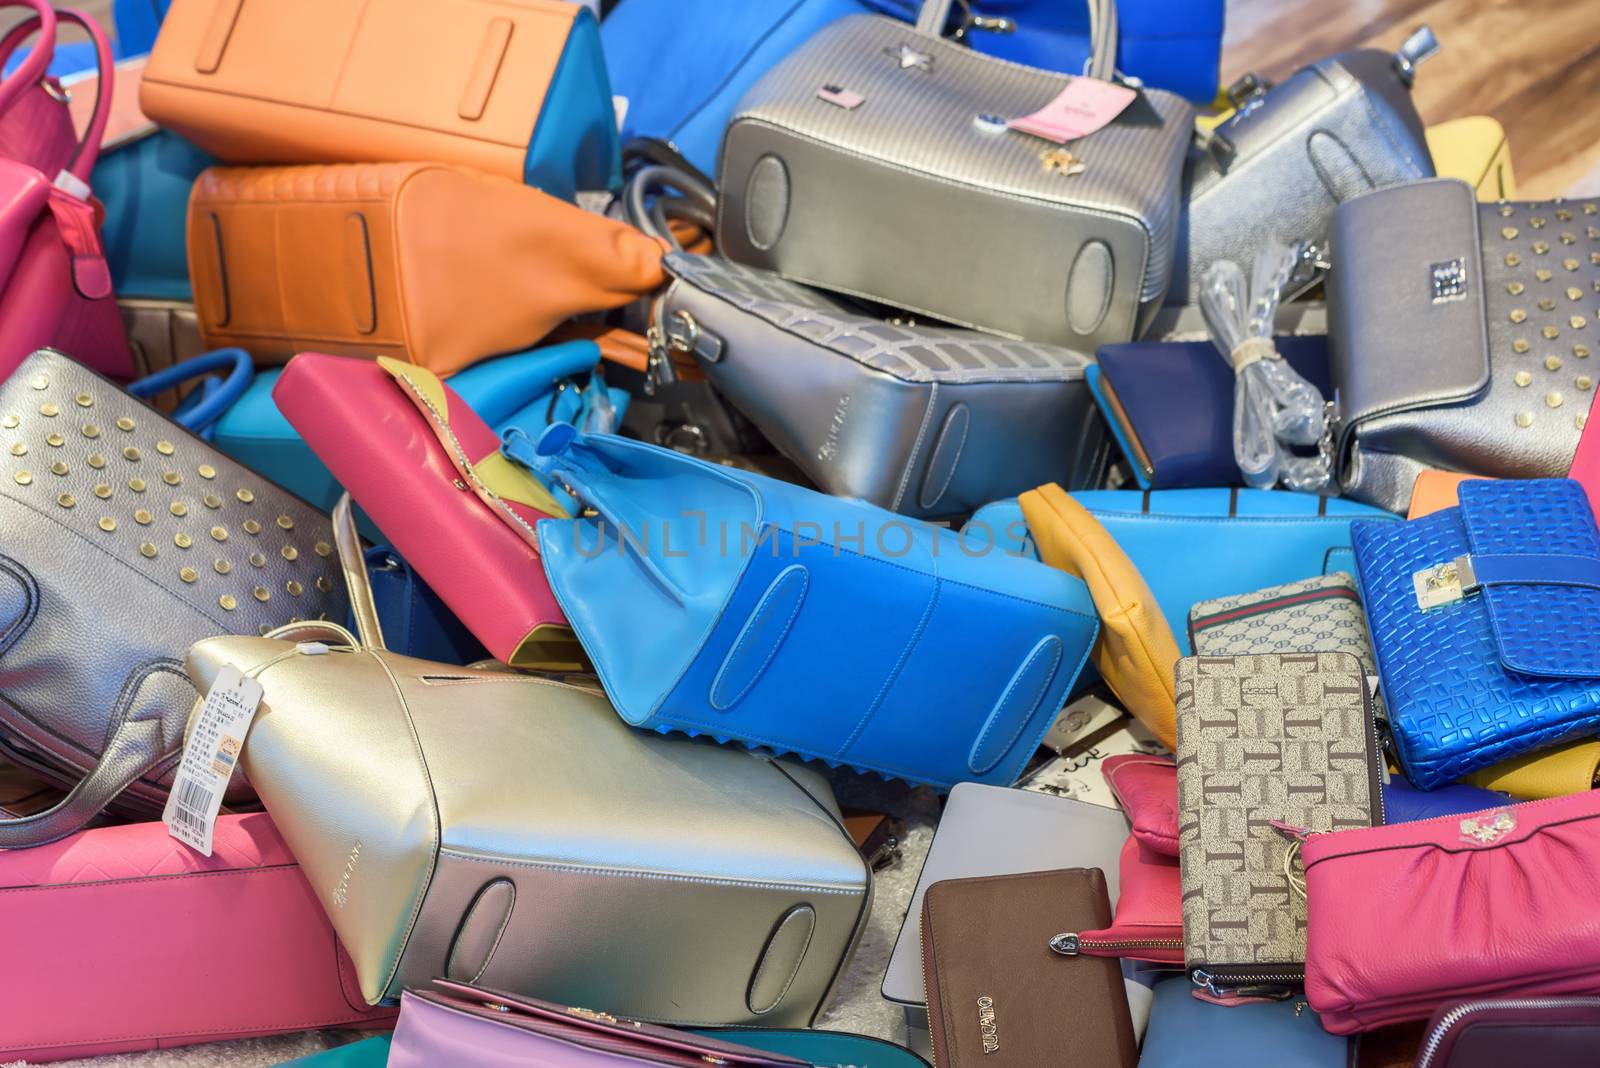 Harbin, Heilongjiang, China - September 2018: Huge pile of multi-colored bags